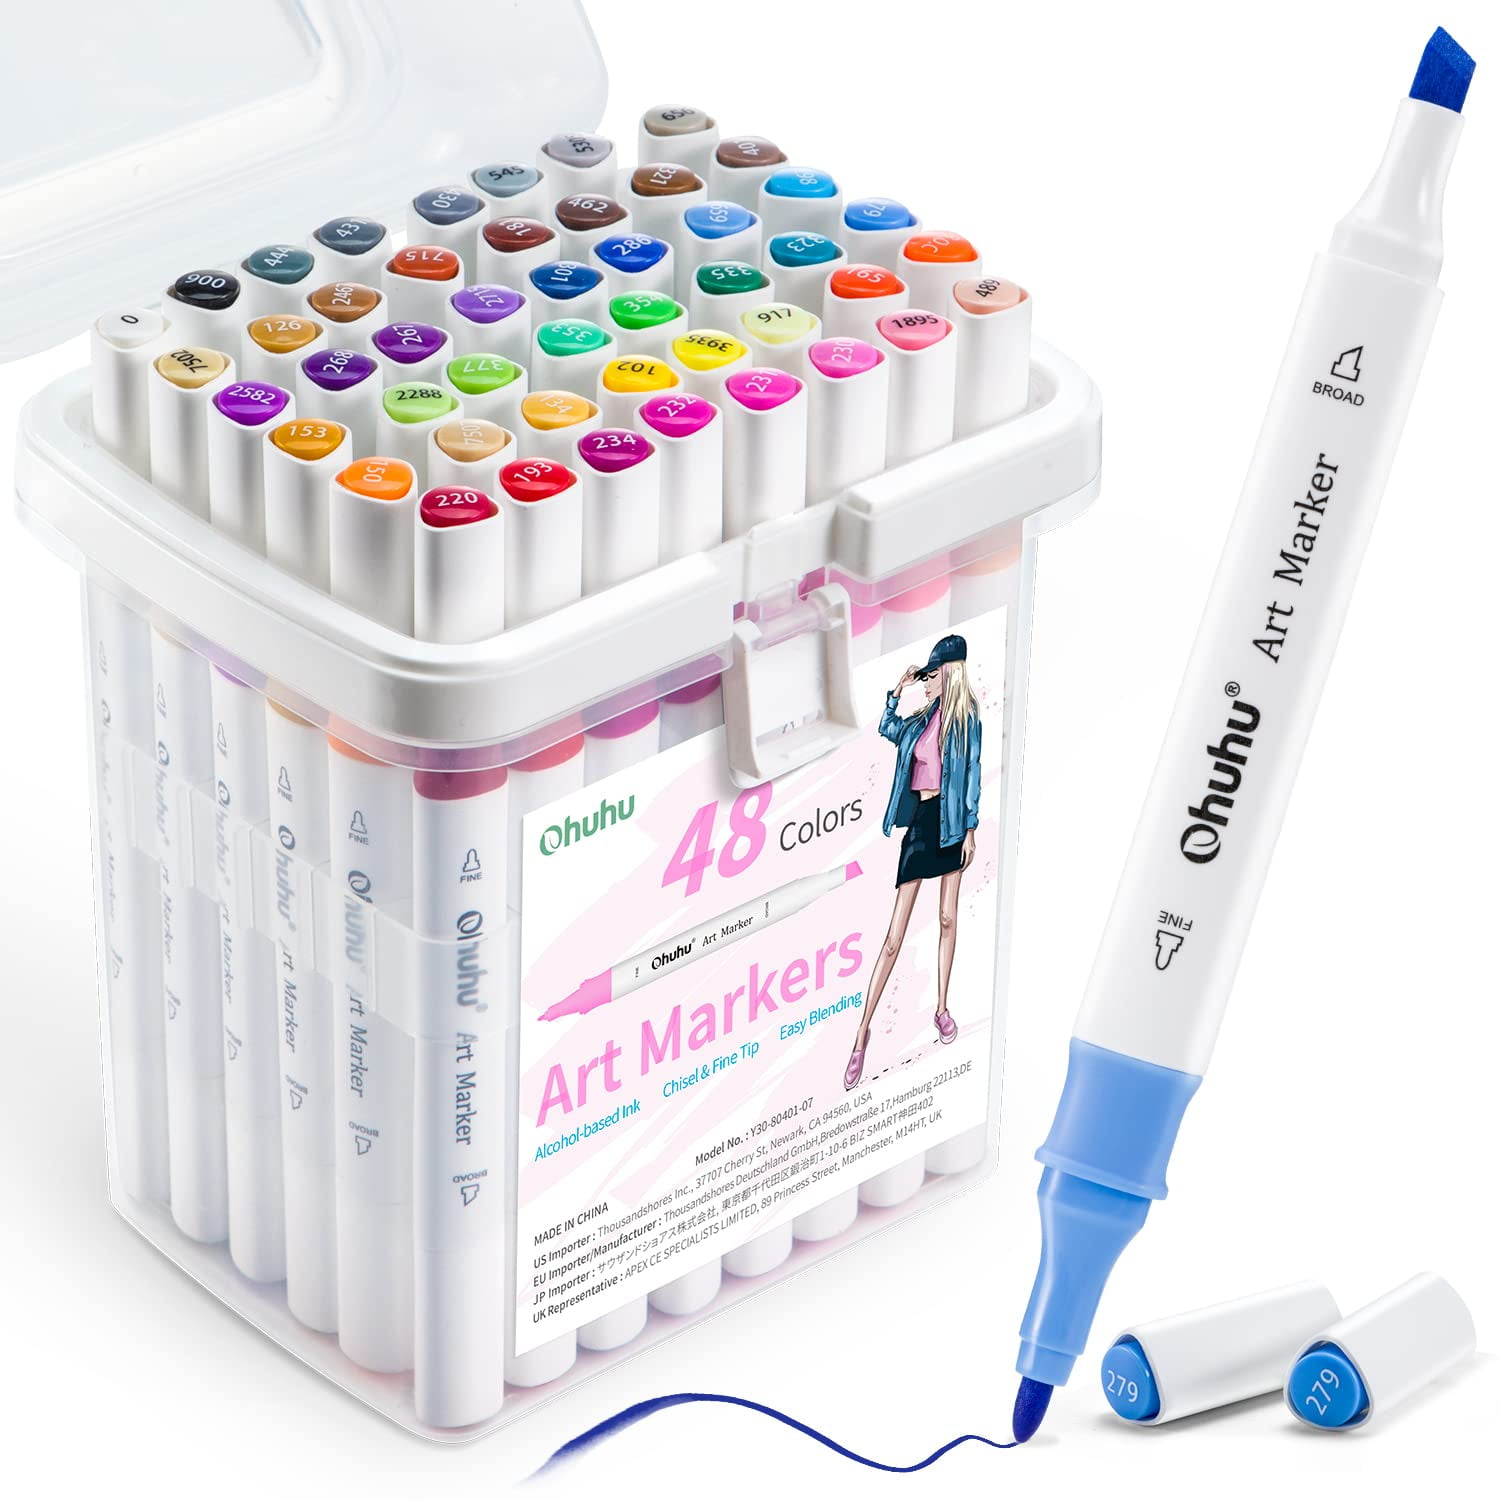 72-Color Alcohol Markers Calligraphy and Illustration Markers Brush & Chisel Alcohol Brush Markers Bonus 1 Blender for Sketching Sketch Marker Set for Kids Adult Coloring Artist Ohuhu Dual Tip 